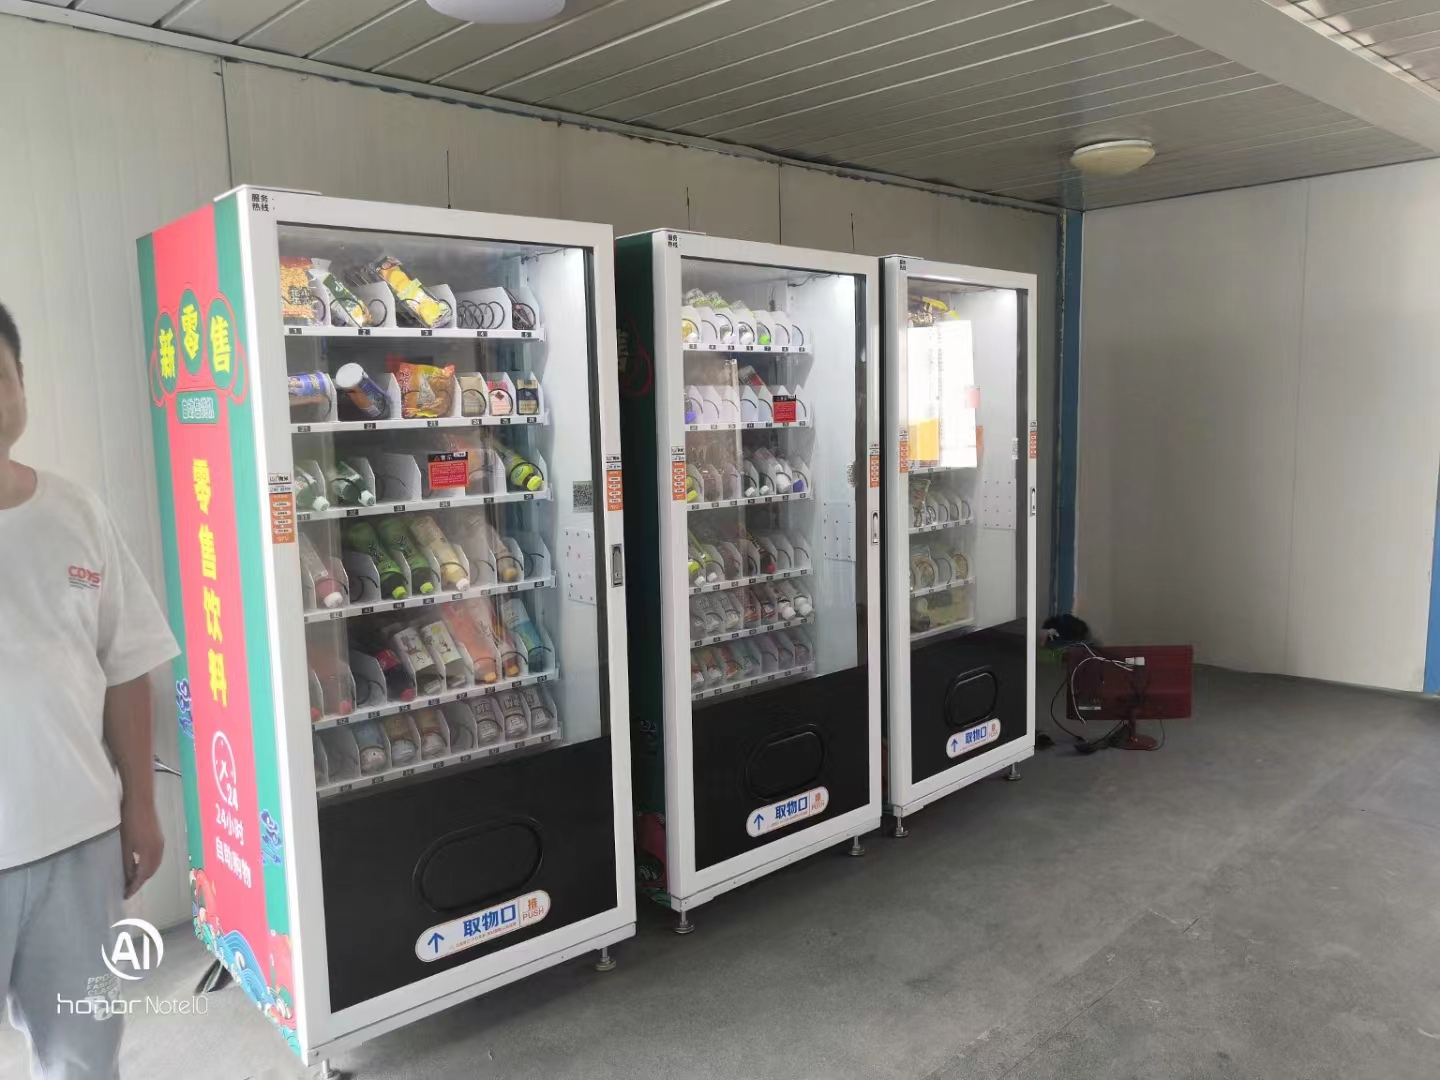 Advantages of Vending Machine Operation